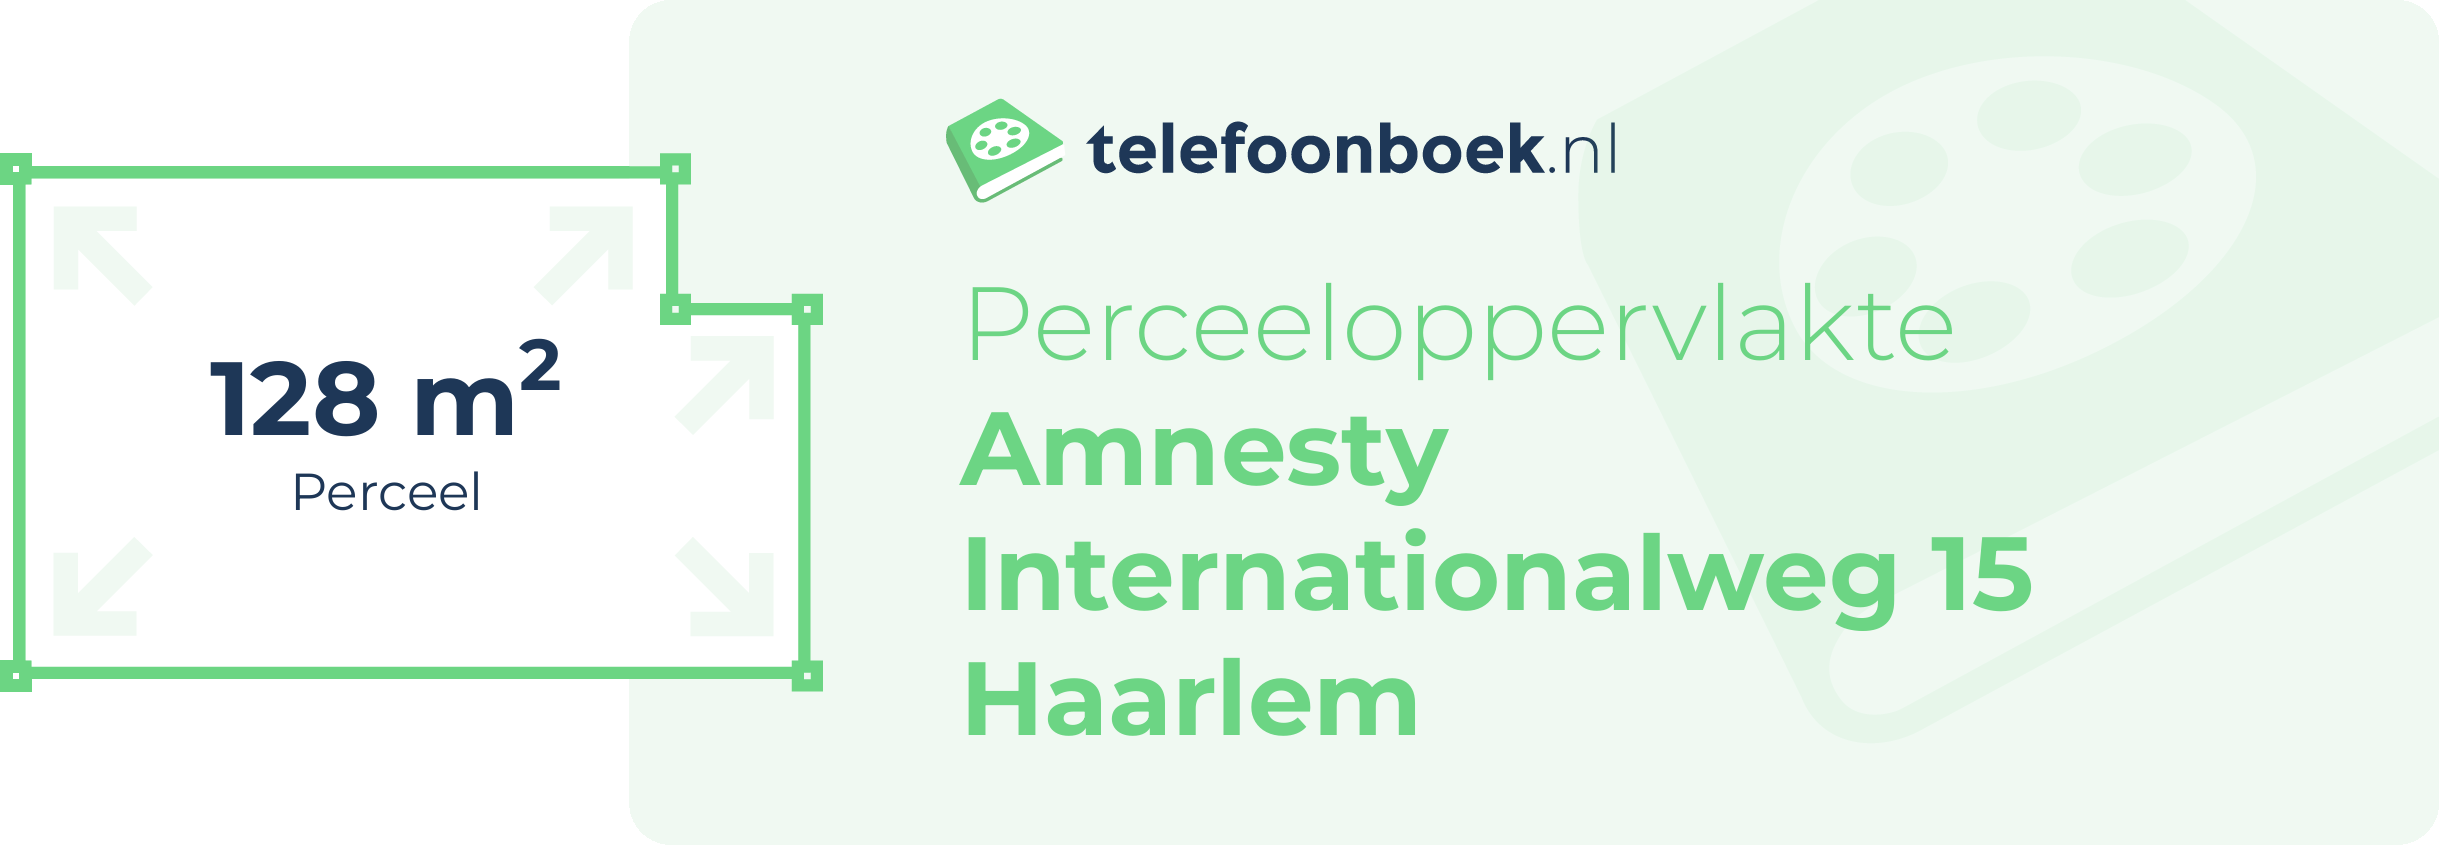 Perceeloppervlakte Amnesty Internationalweg 15 Haarlem